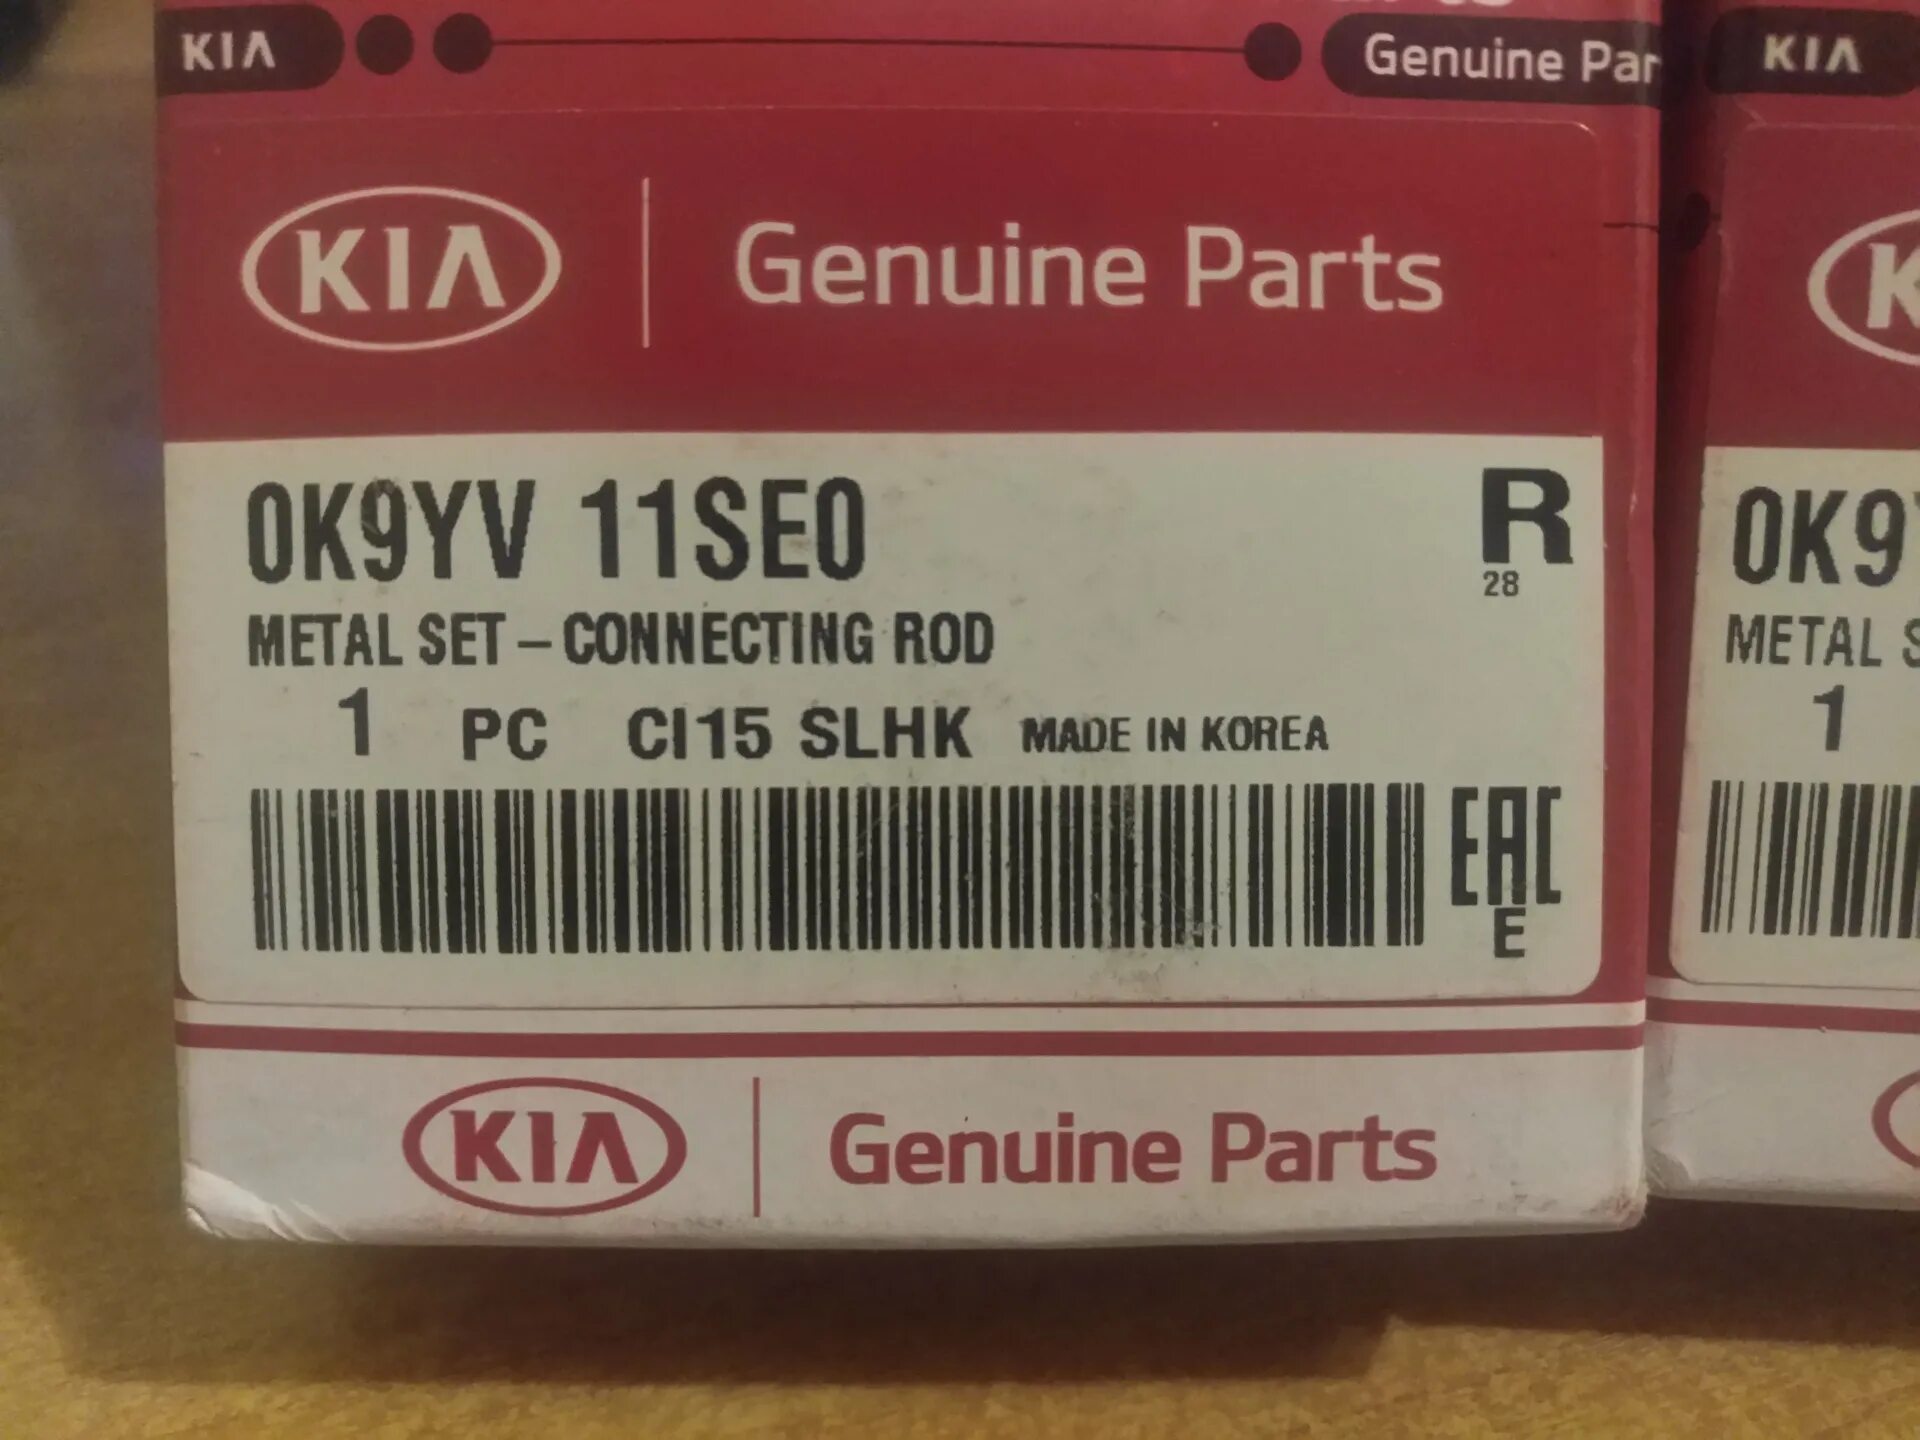 09 ok. 0k9yv11se0. 0k3y0 11 sf0 вкладыши шатунные комплект +0.25. Kia Genuine Parts 0k30e 18 10x. Yv140mak1g1196540.